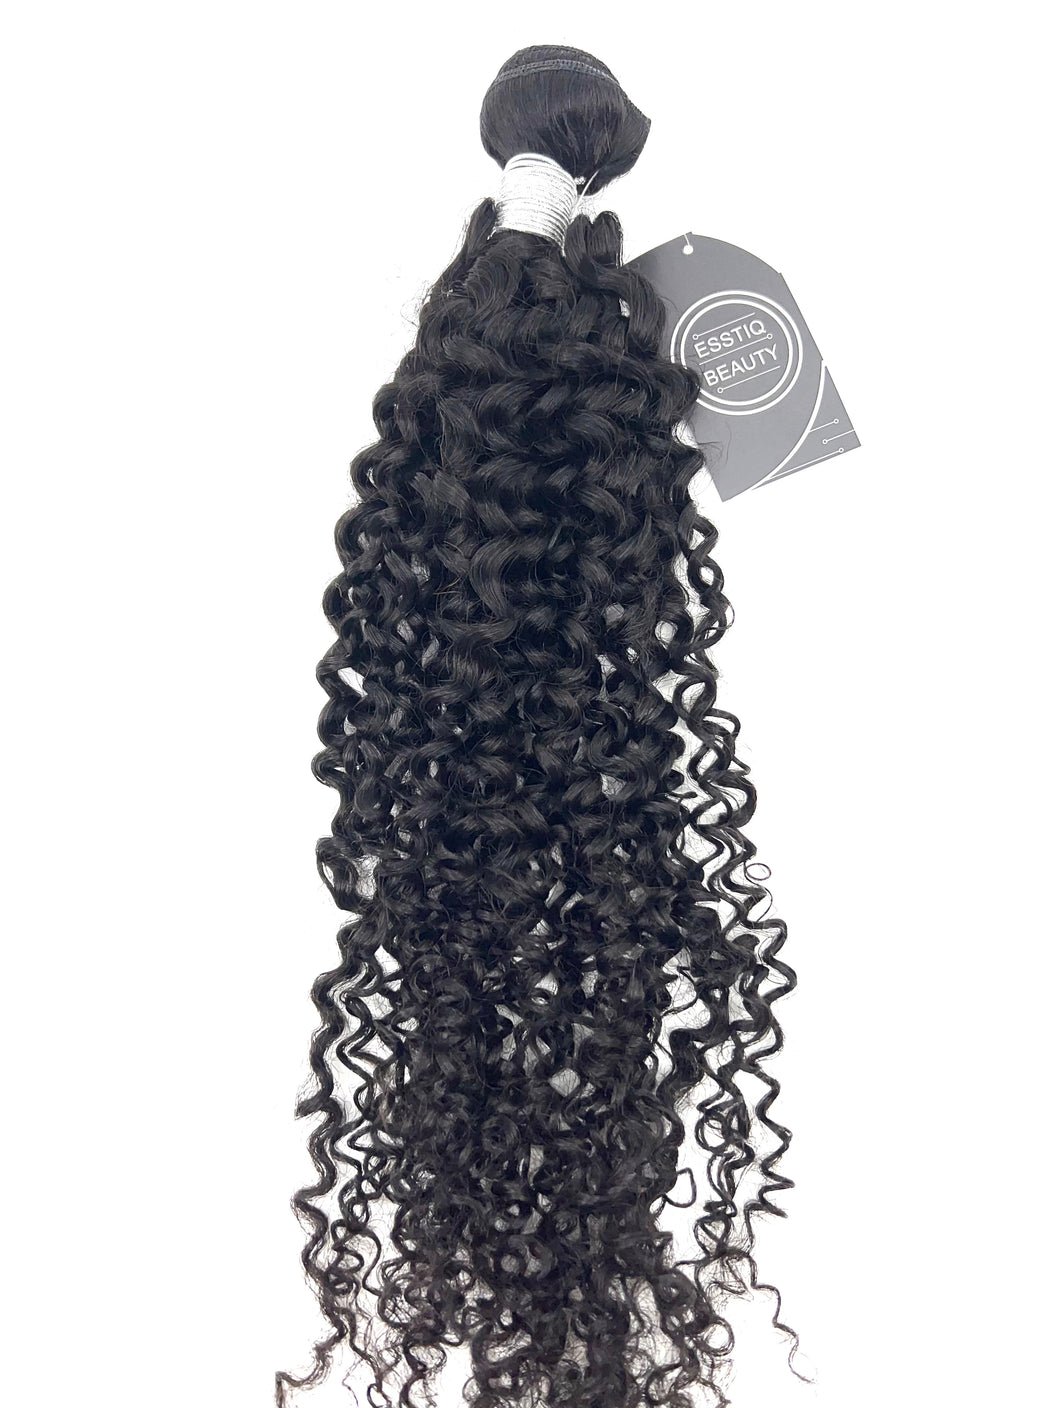 ESSTIQ Brazilian Curly Virgin hair